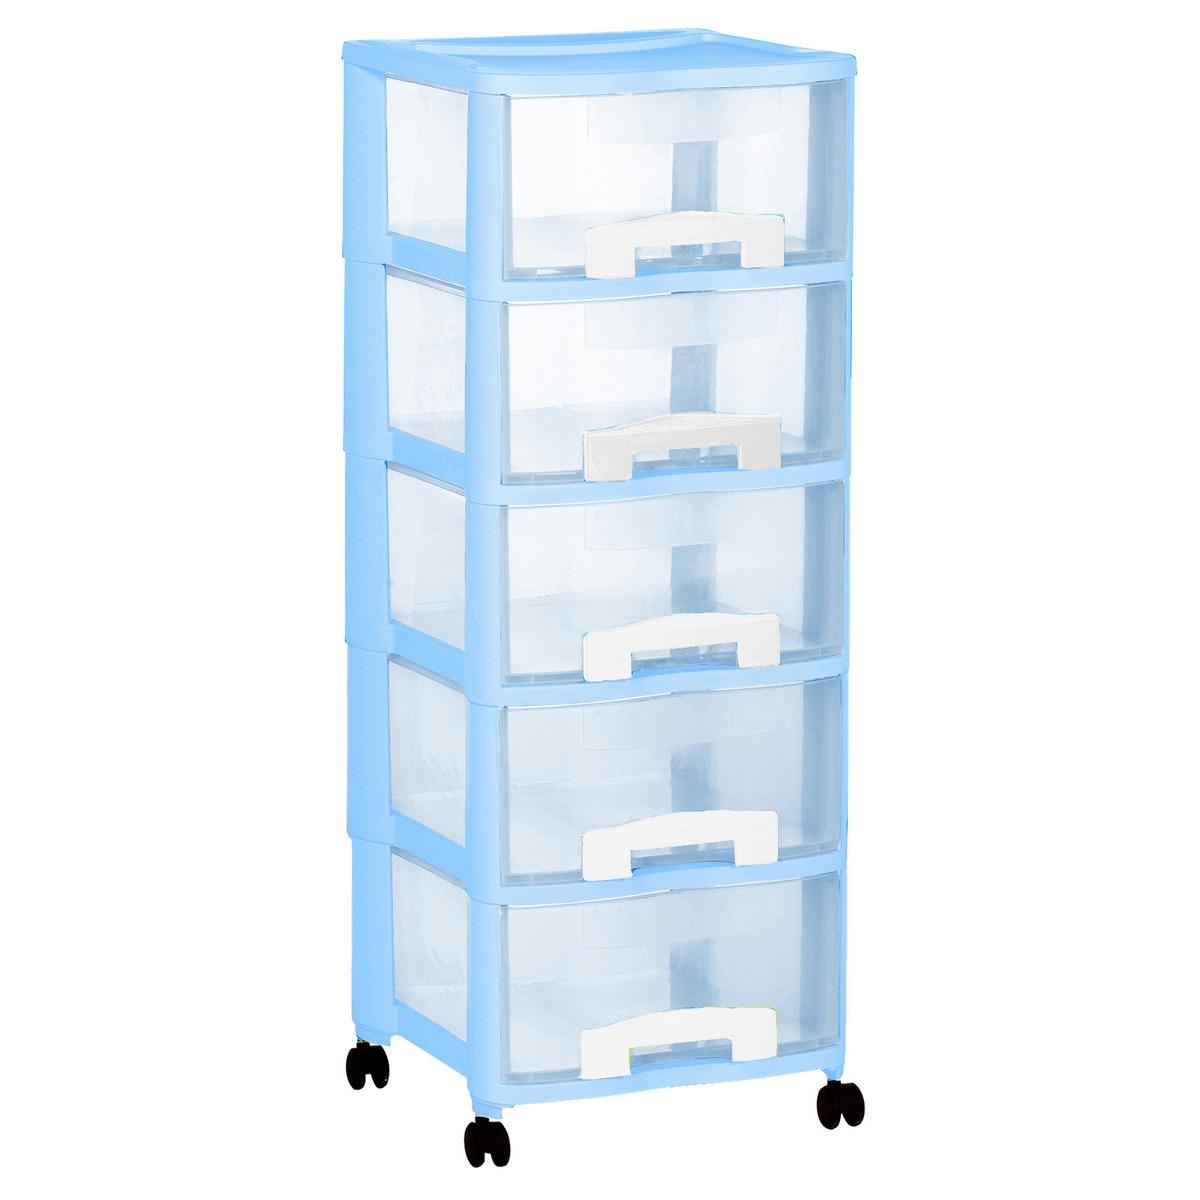 Tour de rangement 5 tiroirs de 20 litres en plastique Allibert - Bleu, blanc